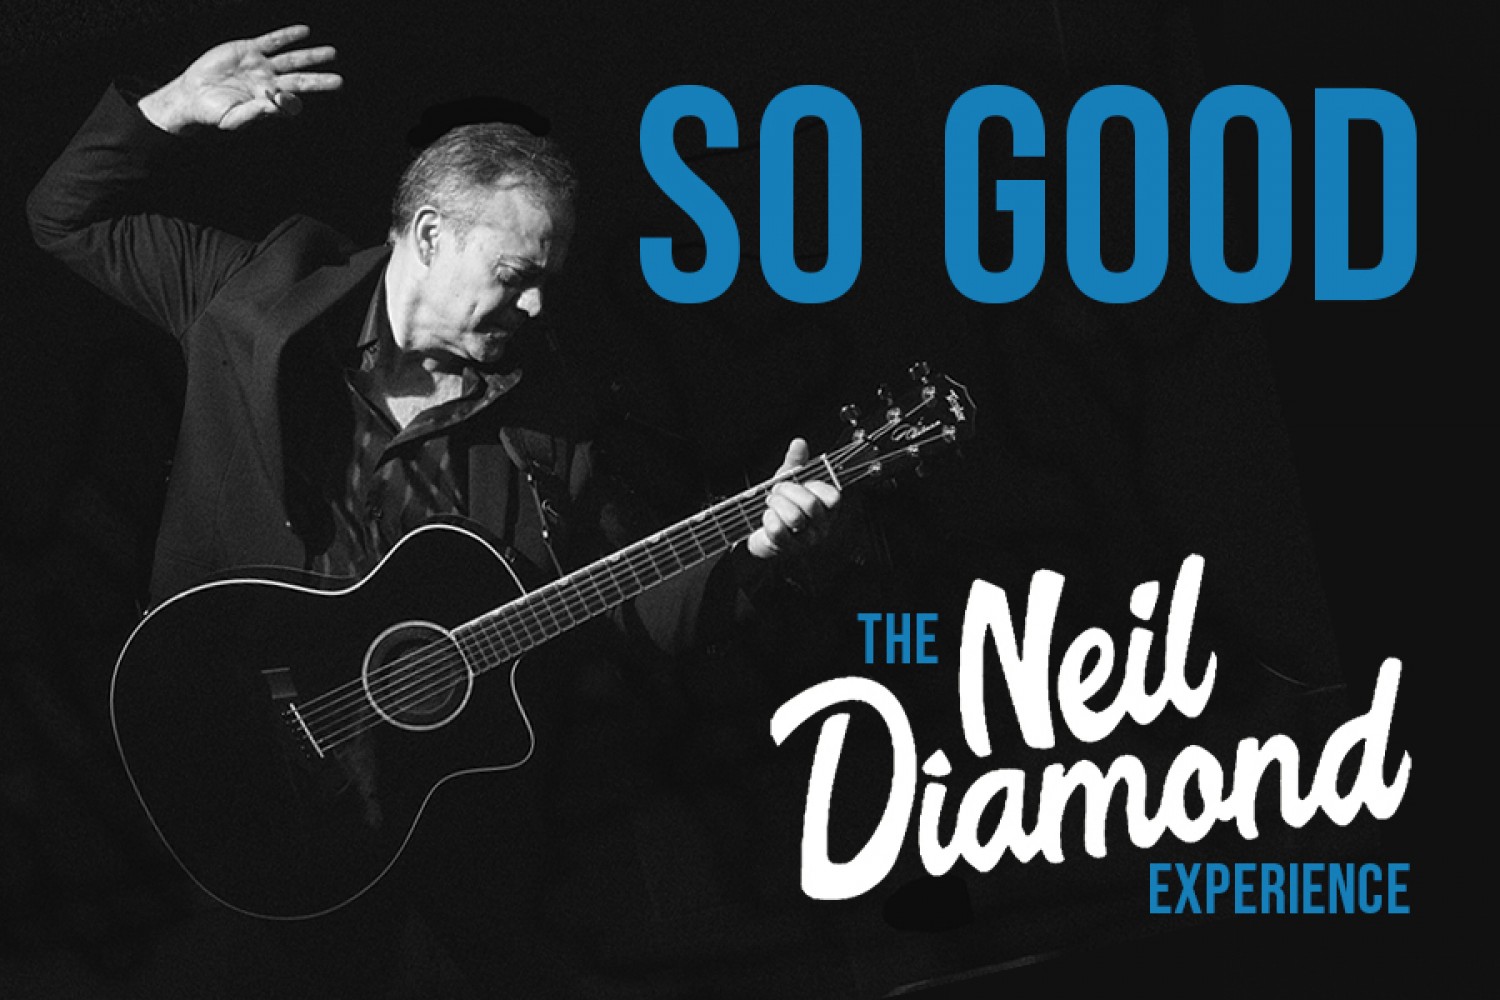 I Am, He Said: Celebrating the Music of Neil Diamond